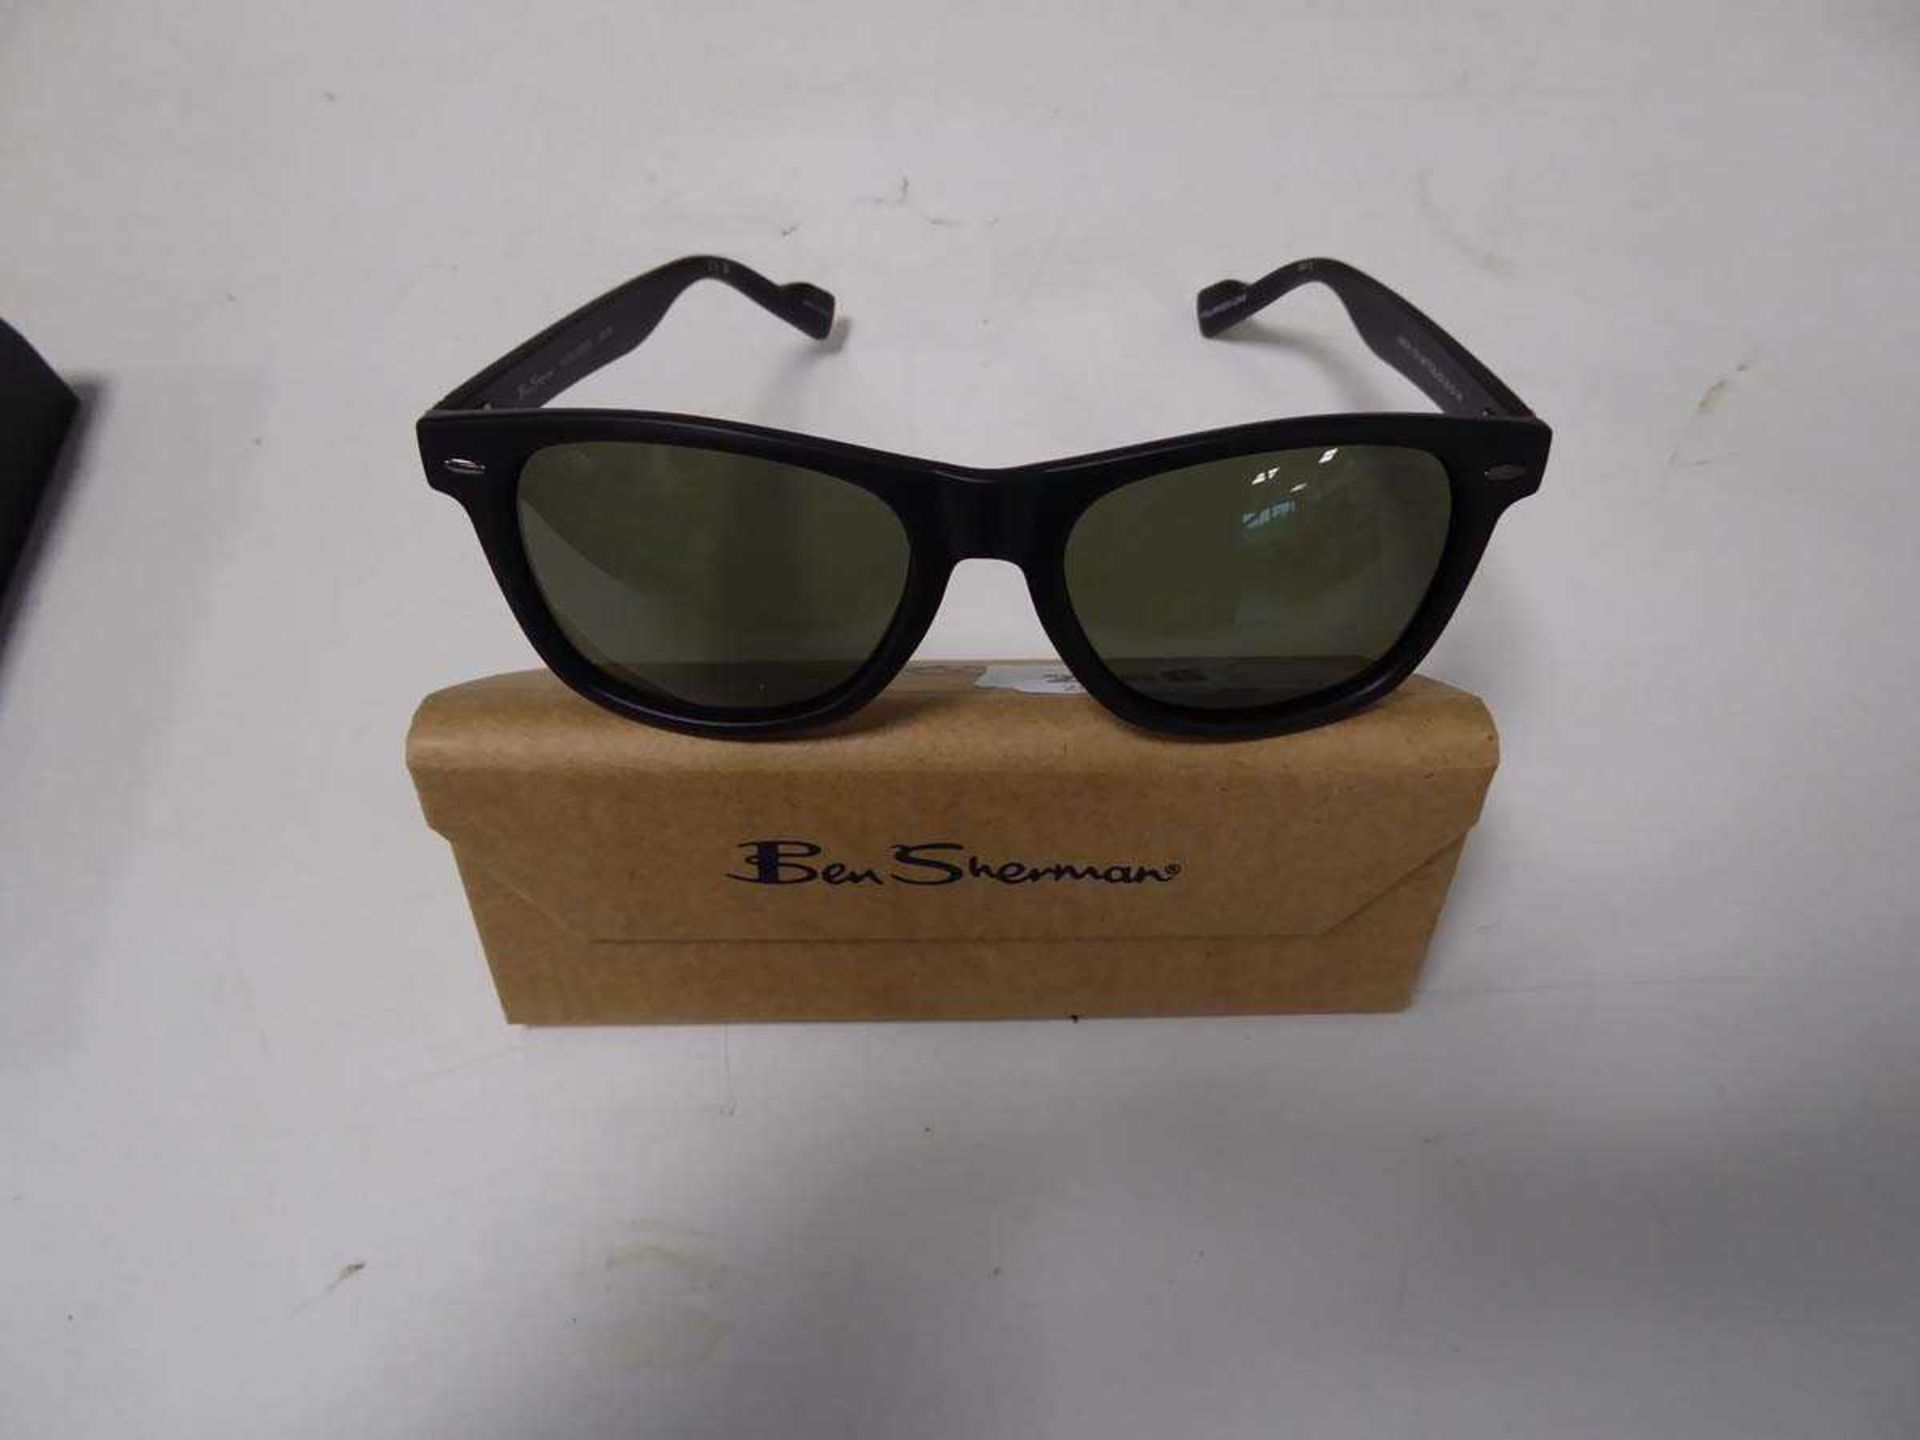 +VAT Pair of Ben Sherman sunglasses in case